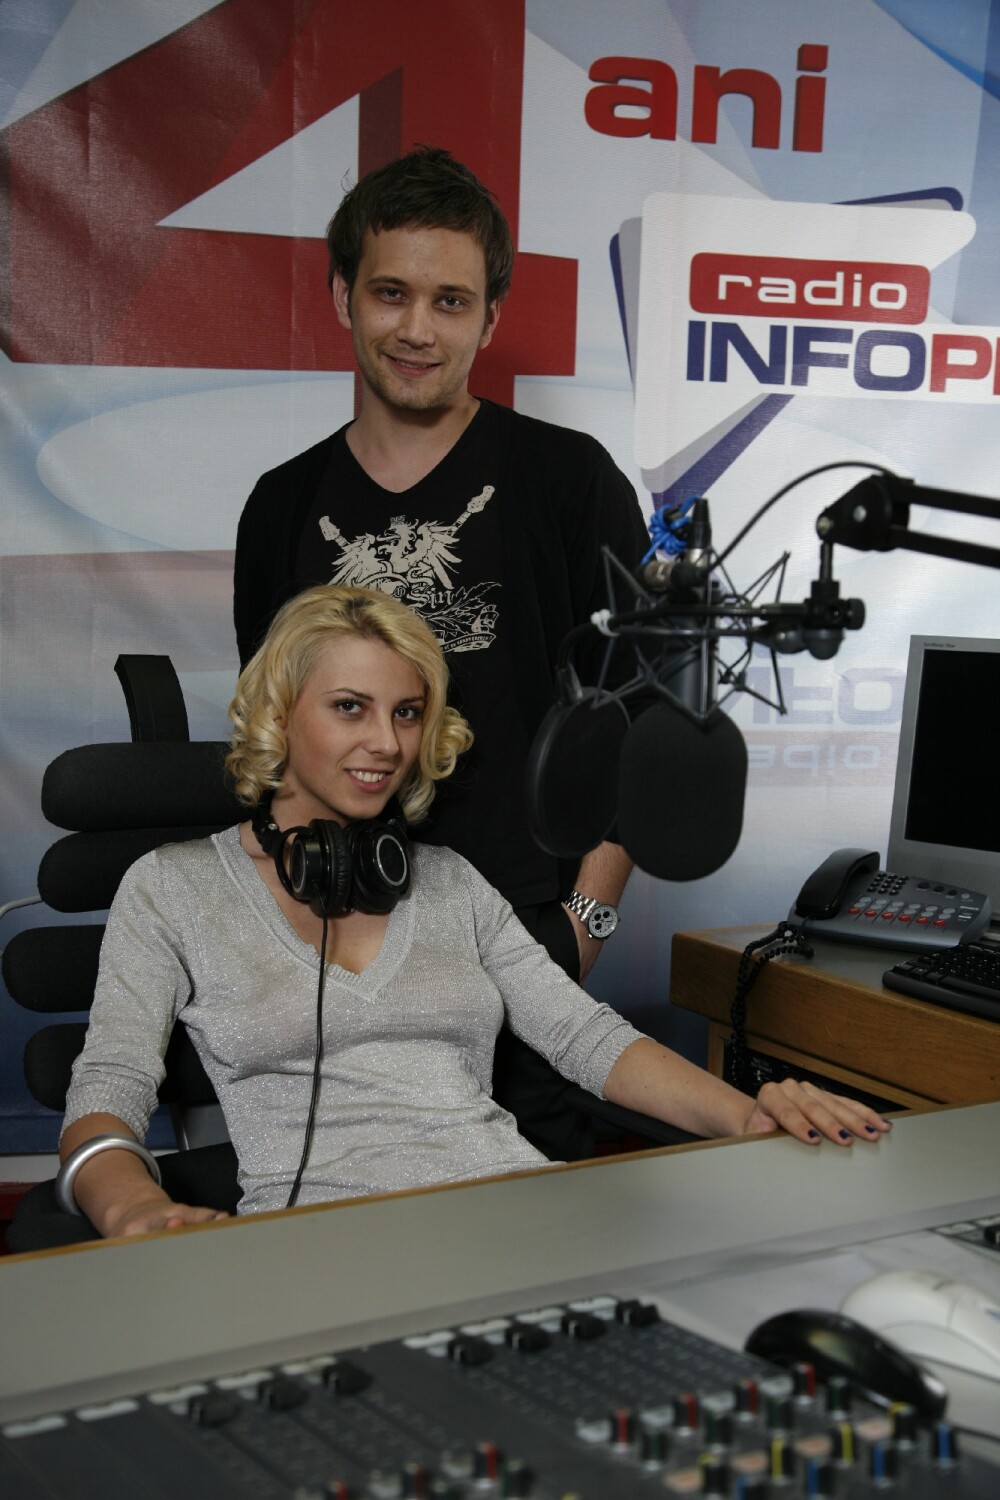 Alina Plugaru vrea sa faca un top al pozitiilor sexuale la Radio InfoPro! - Imaginea 4